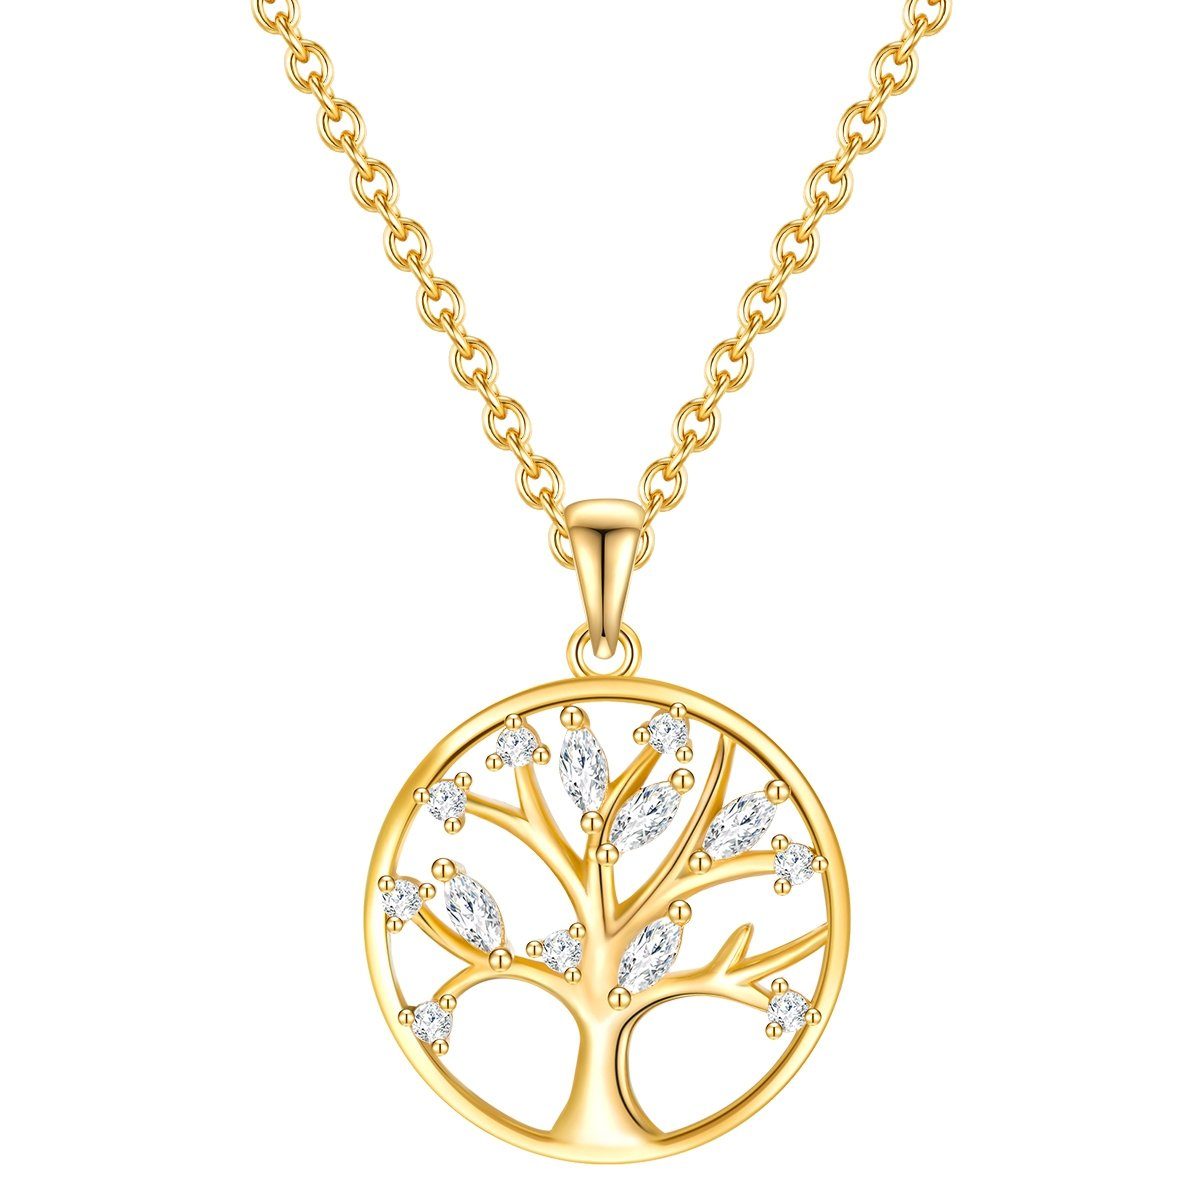 Lebens Rafaela Sterling Baum gelbgold, Silber aus Silberkette Donata des